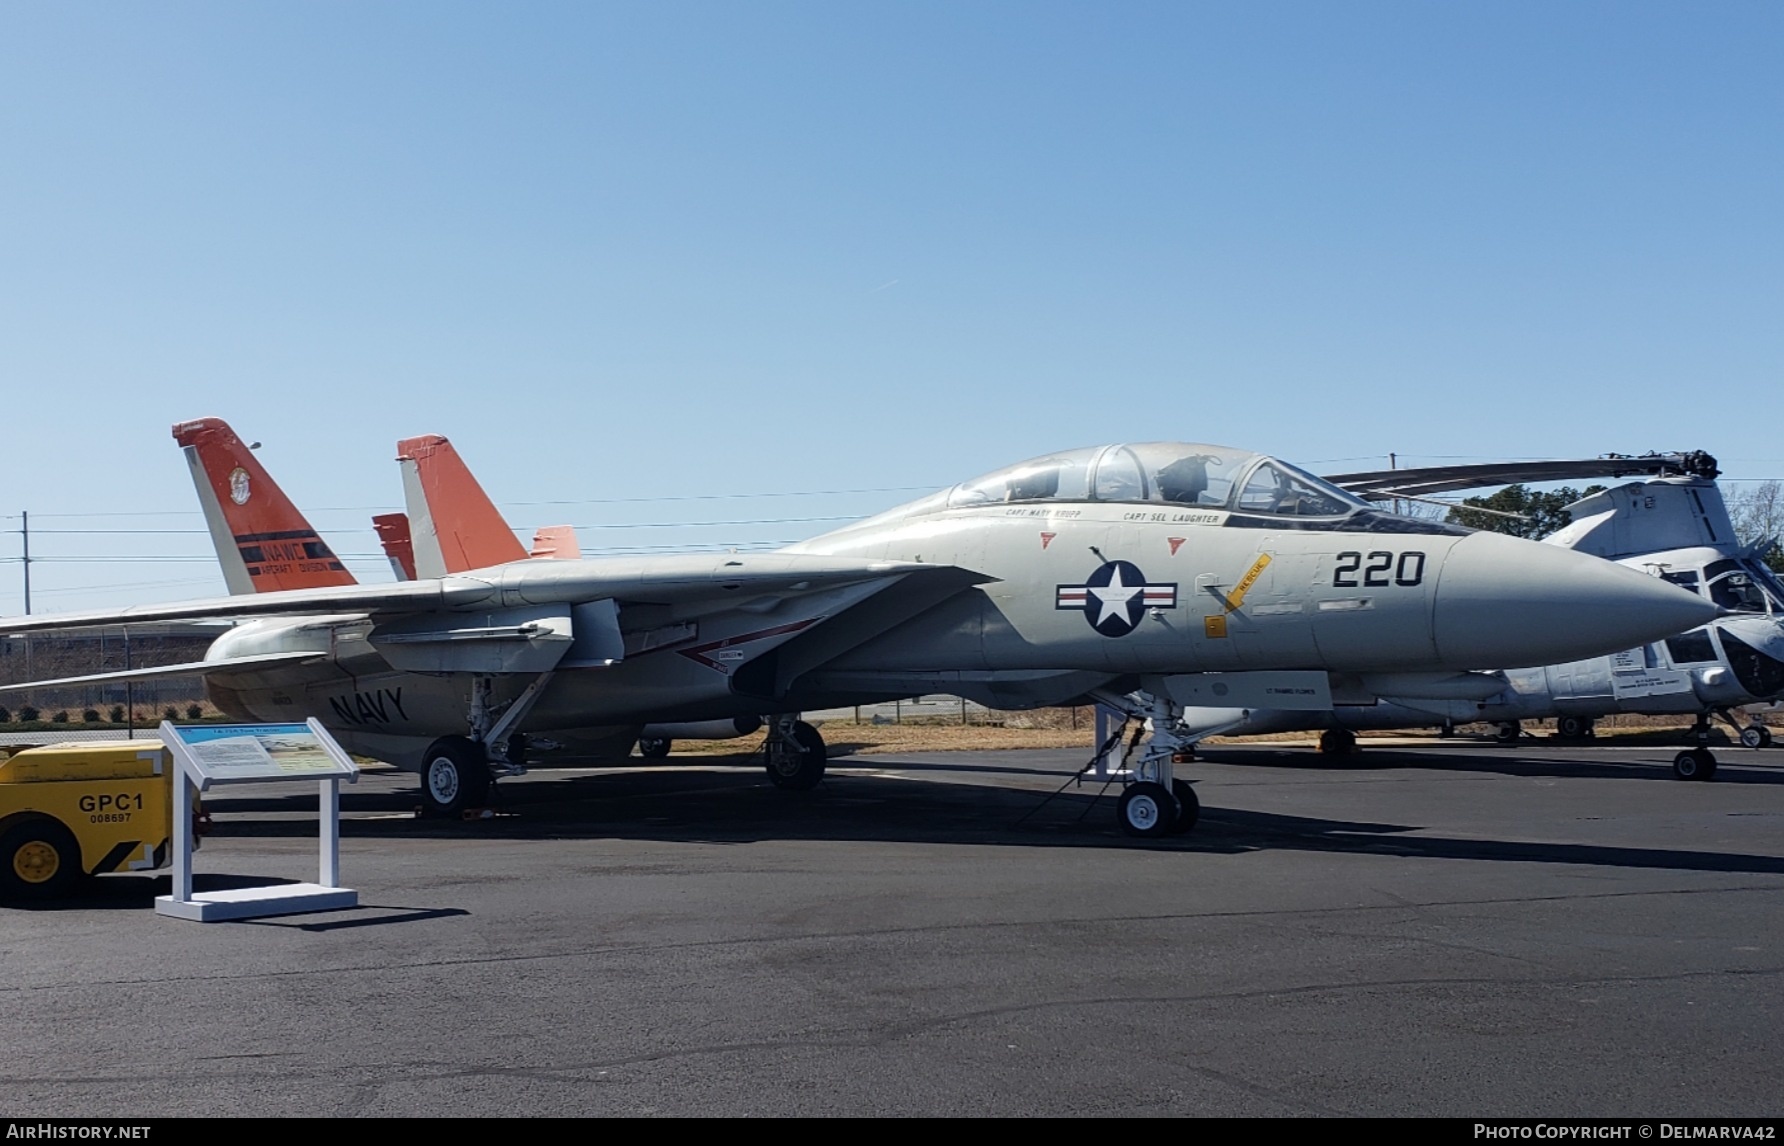 Aircraft Photo of 161623 | Grumman NF-14D Tomcat | USA - Navy | AirHistory.net #473087